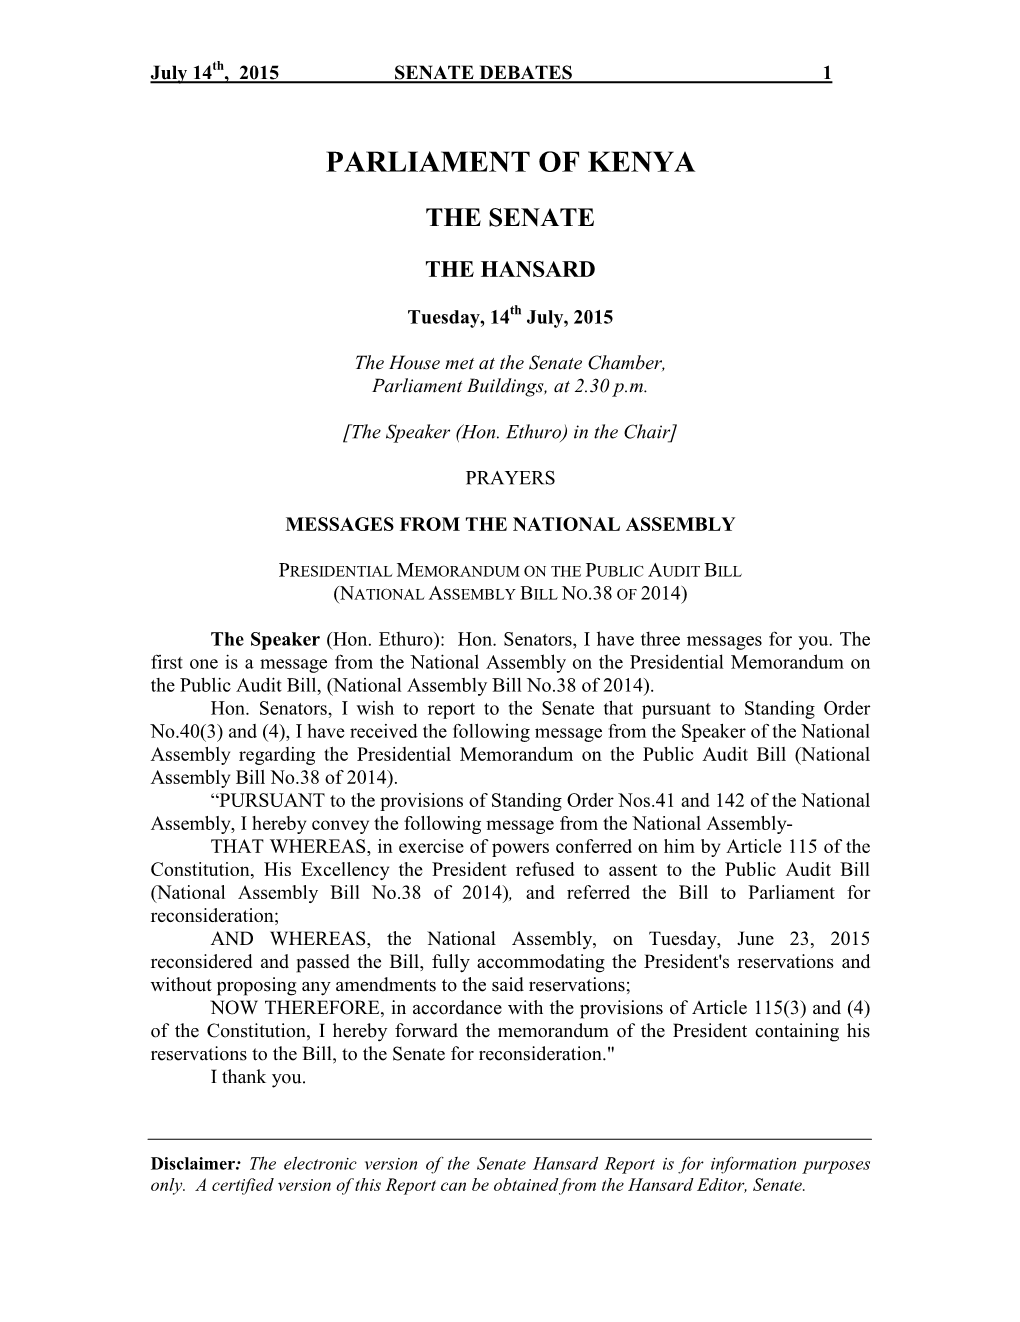 Parliament of Kenya the Senate